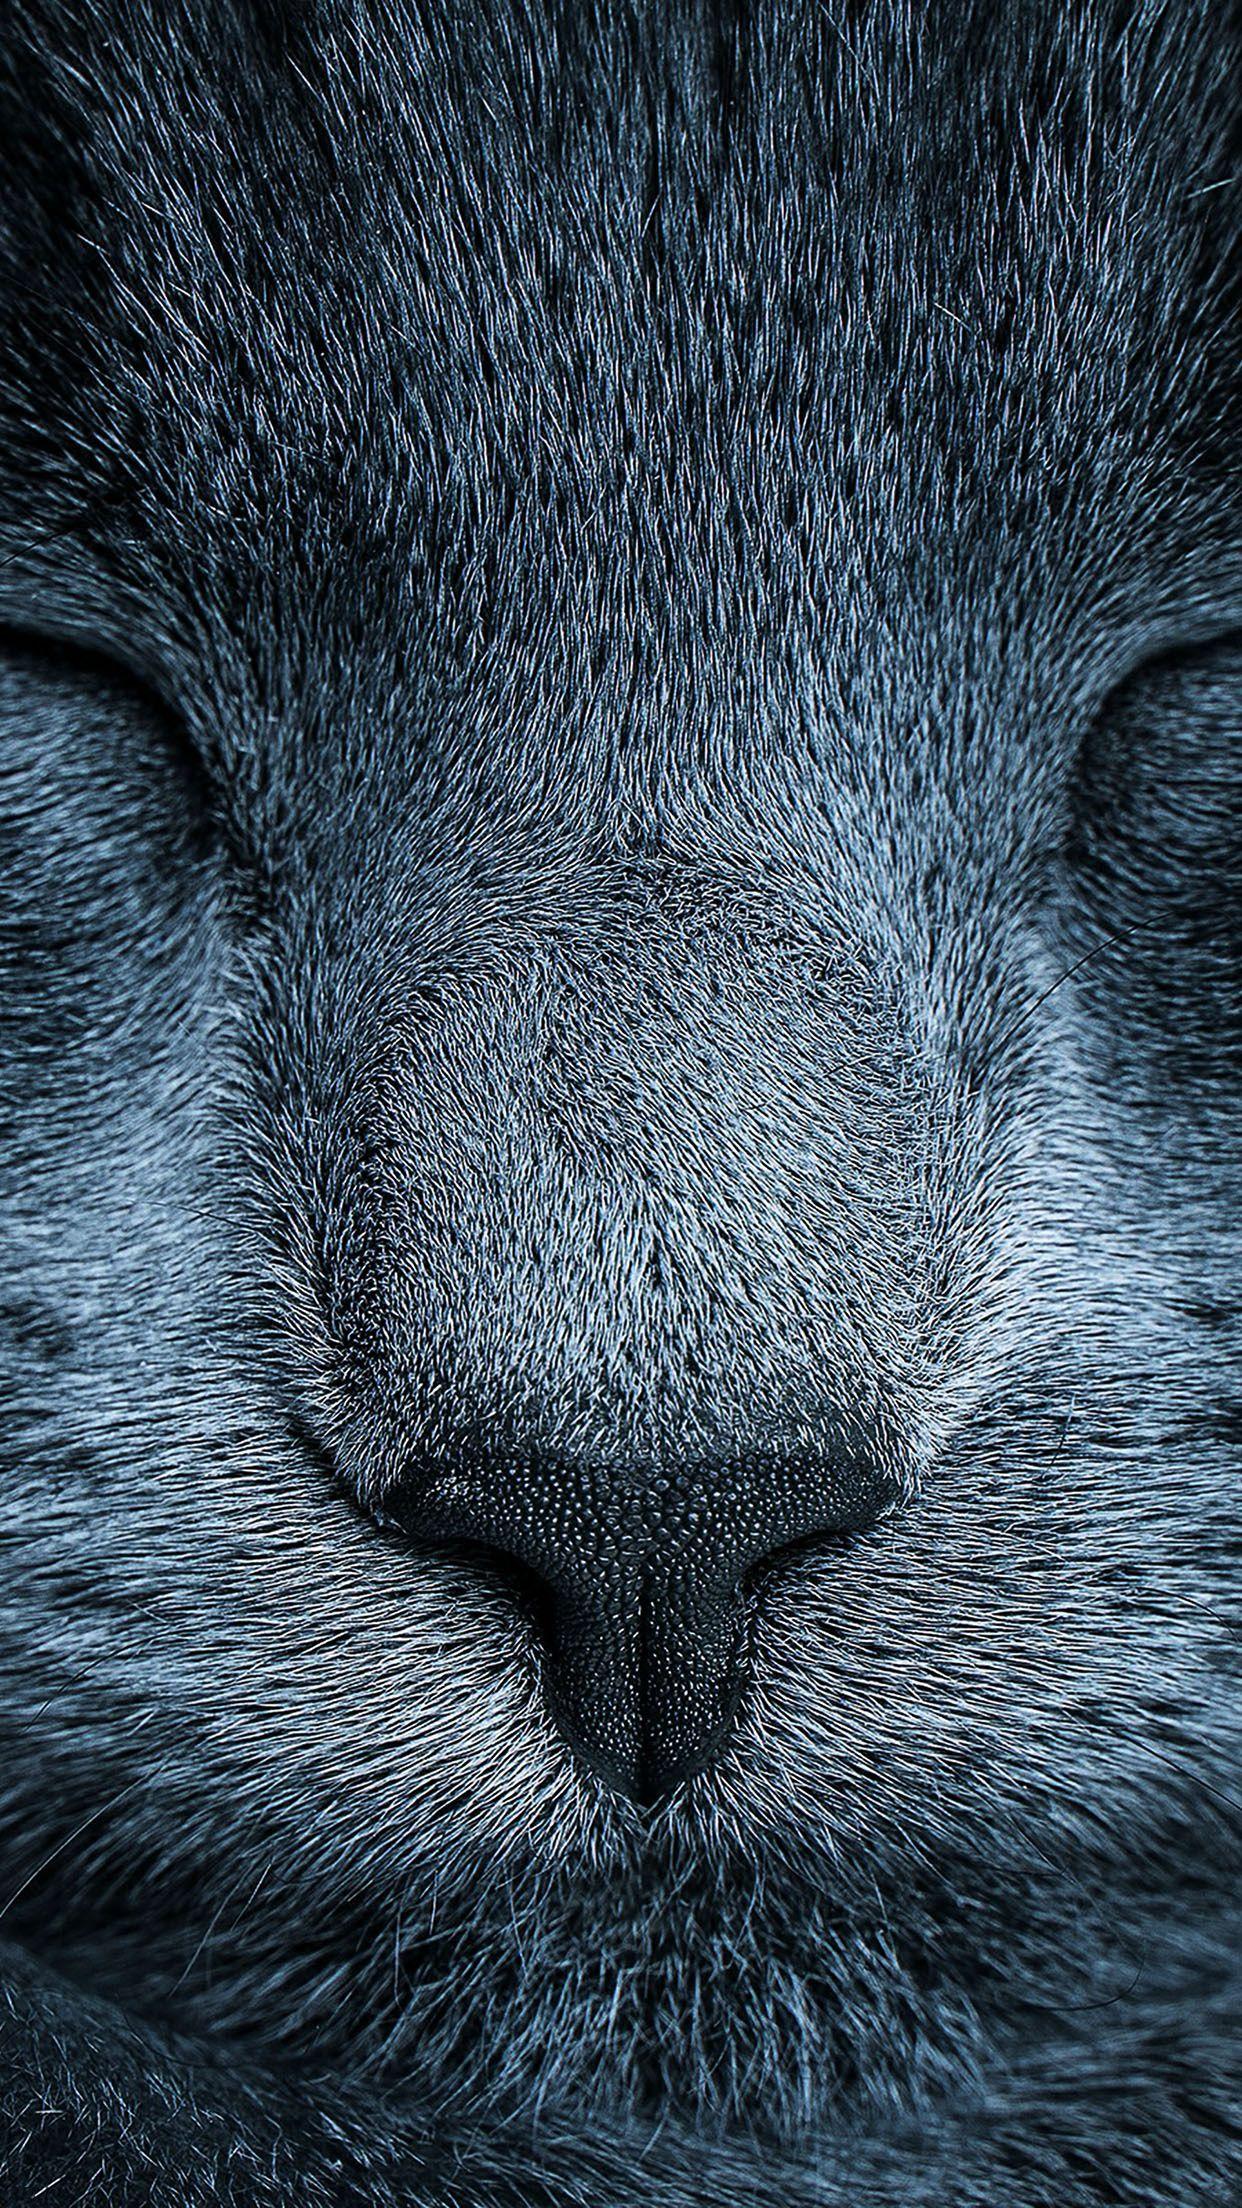 Sleeping Cat Eyes Closed Grey Close Up Android Wallpaper. art